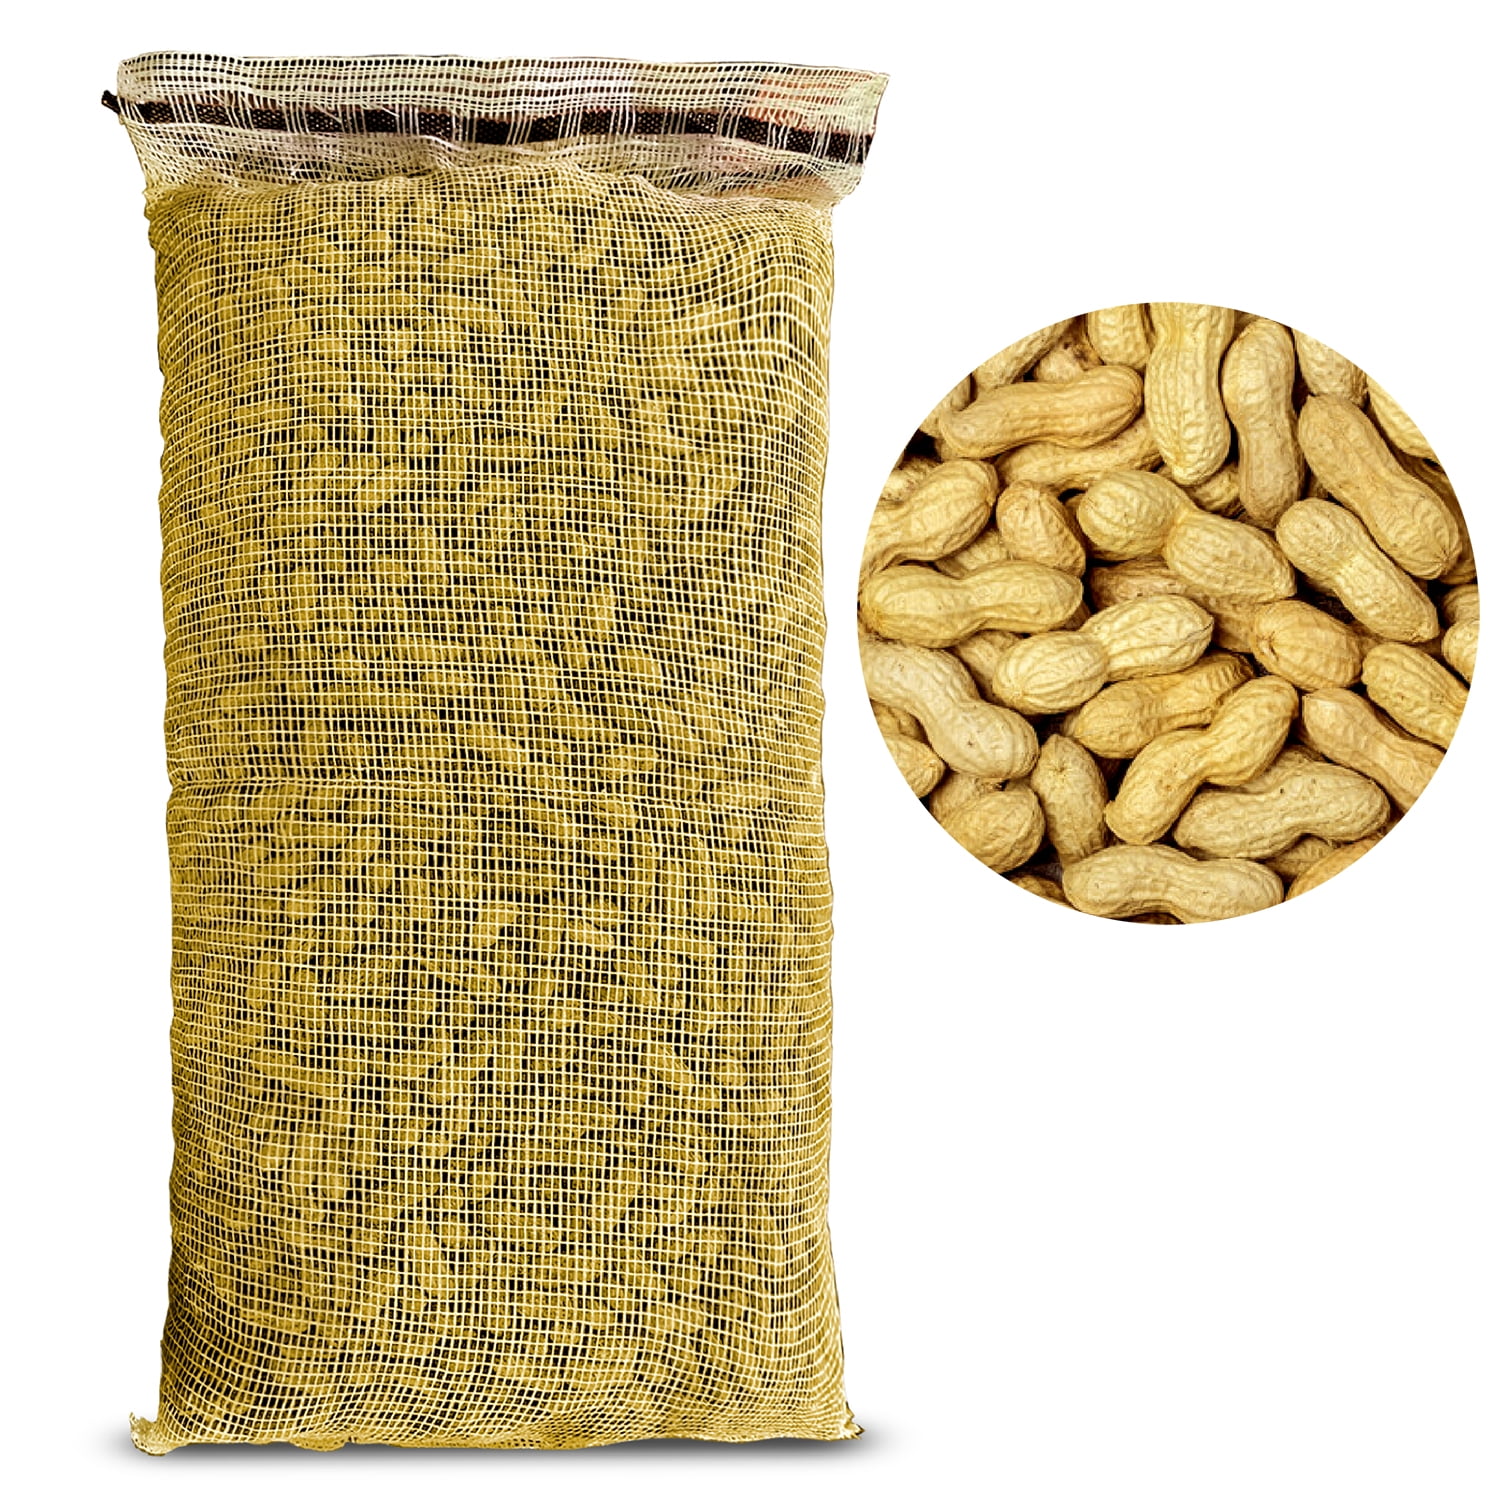 PLANTERS® Salted Peanuts, 6 oz bag - PLANTERS® Brand